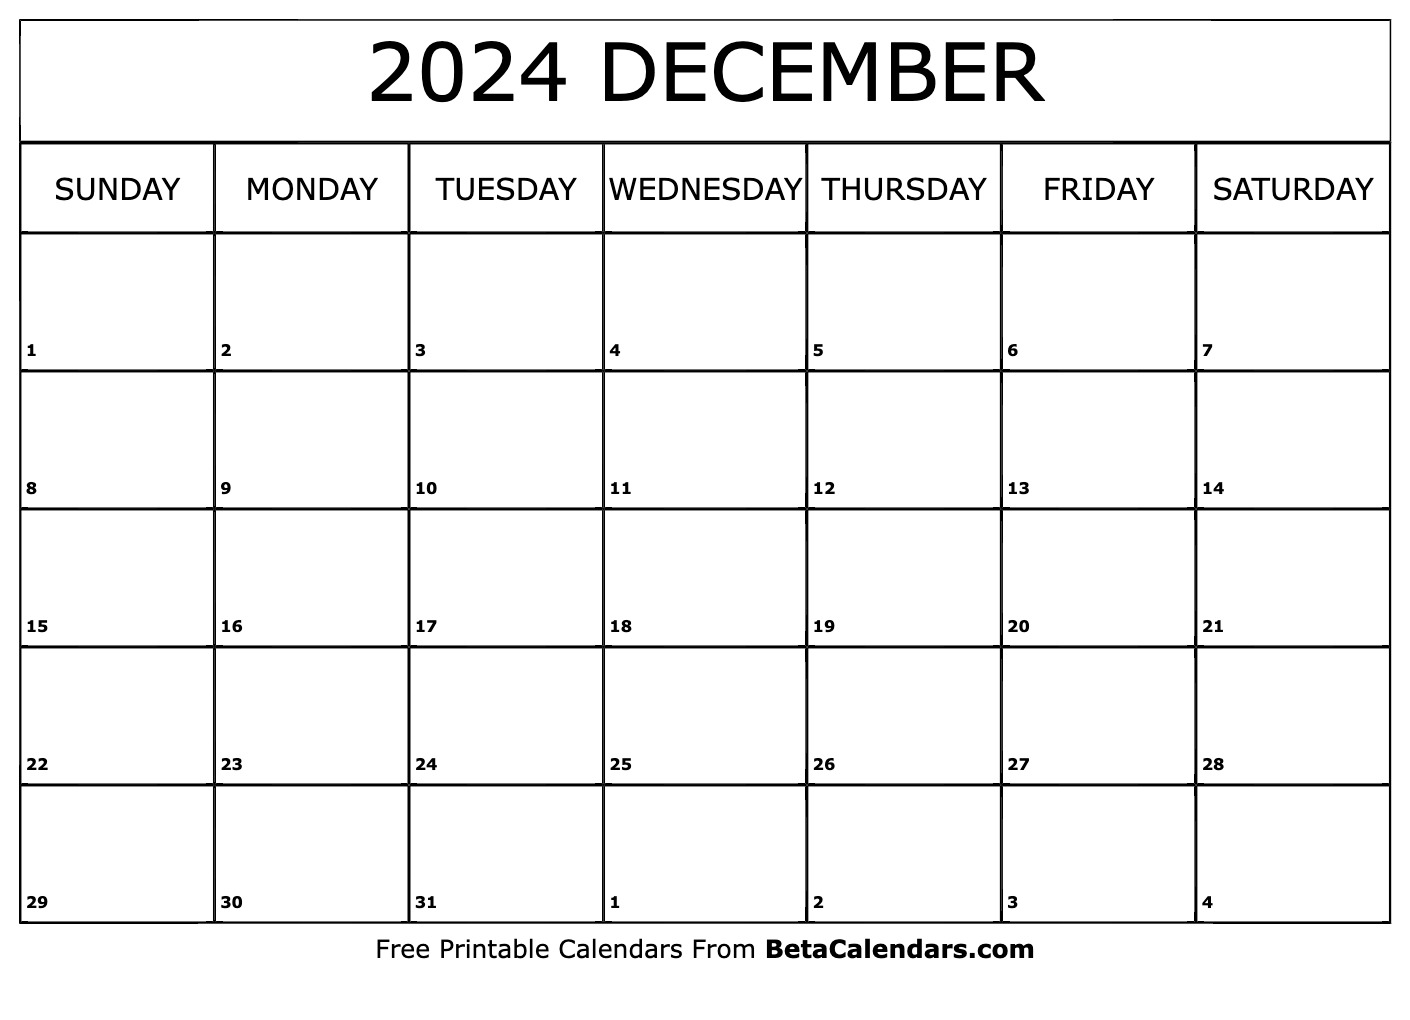 free-printable-december-2024-calendar